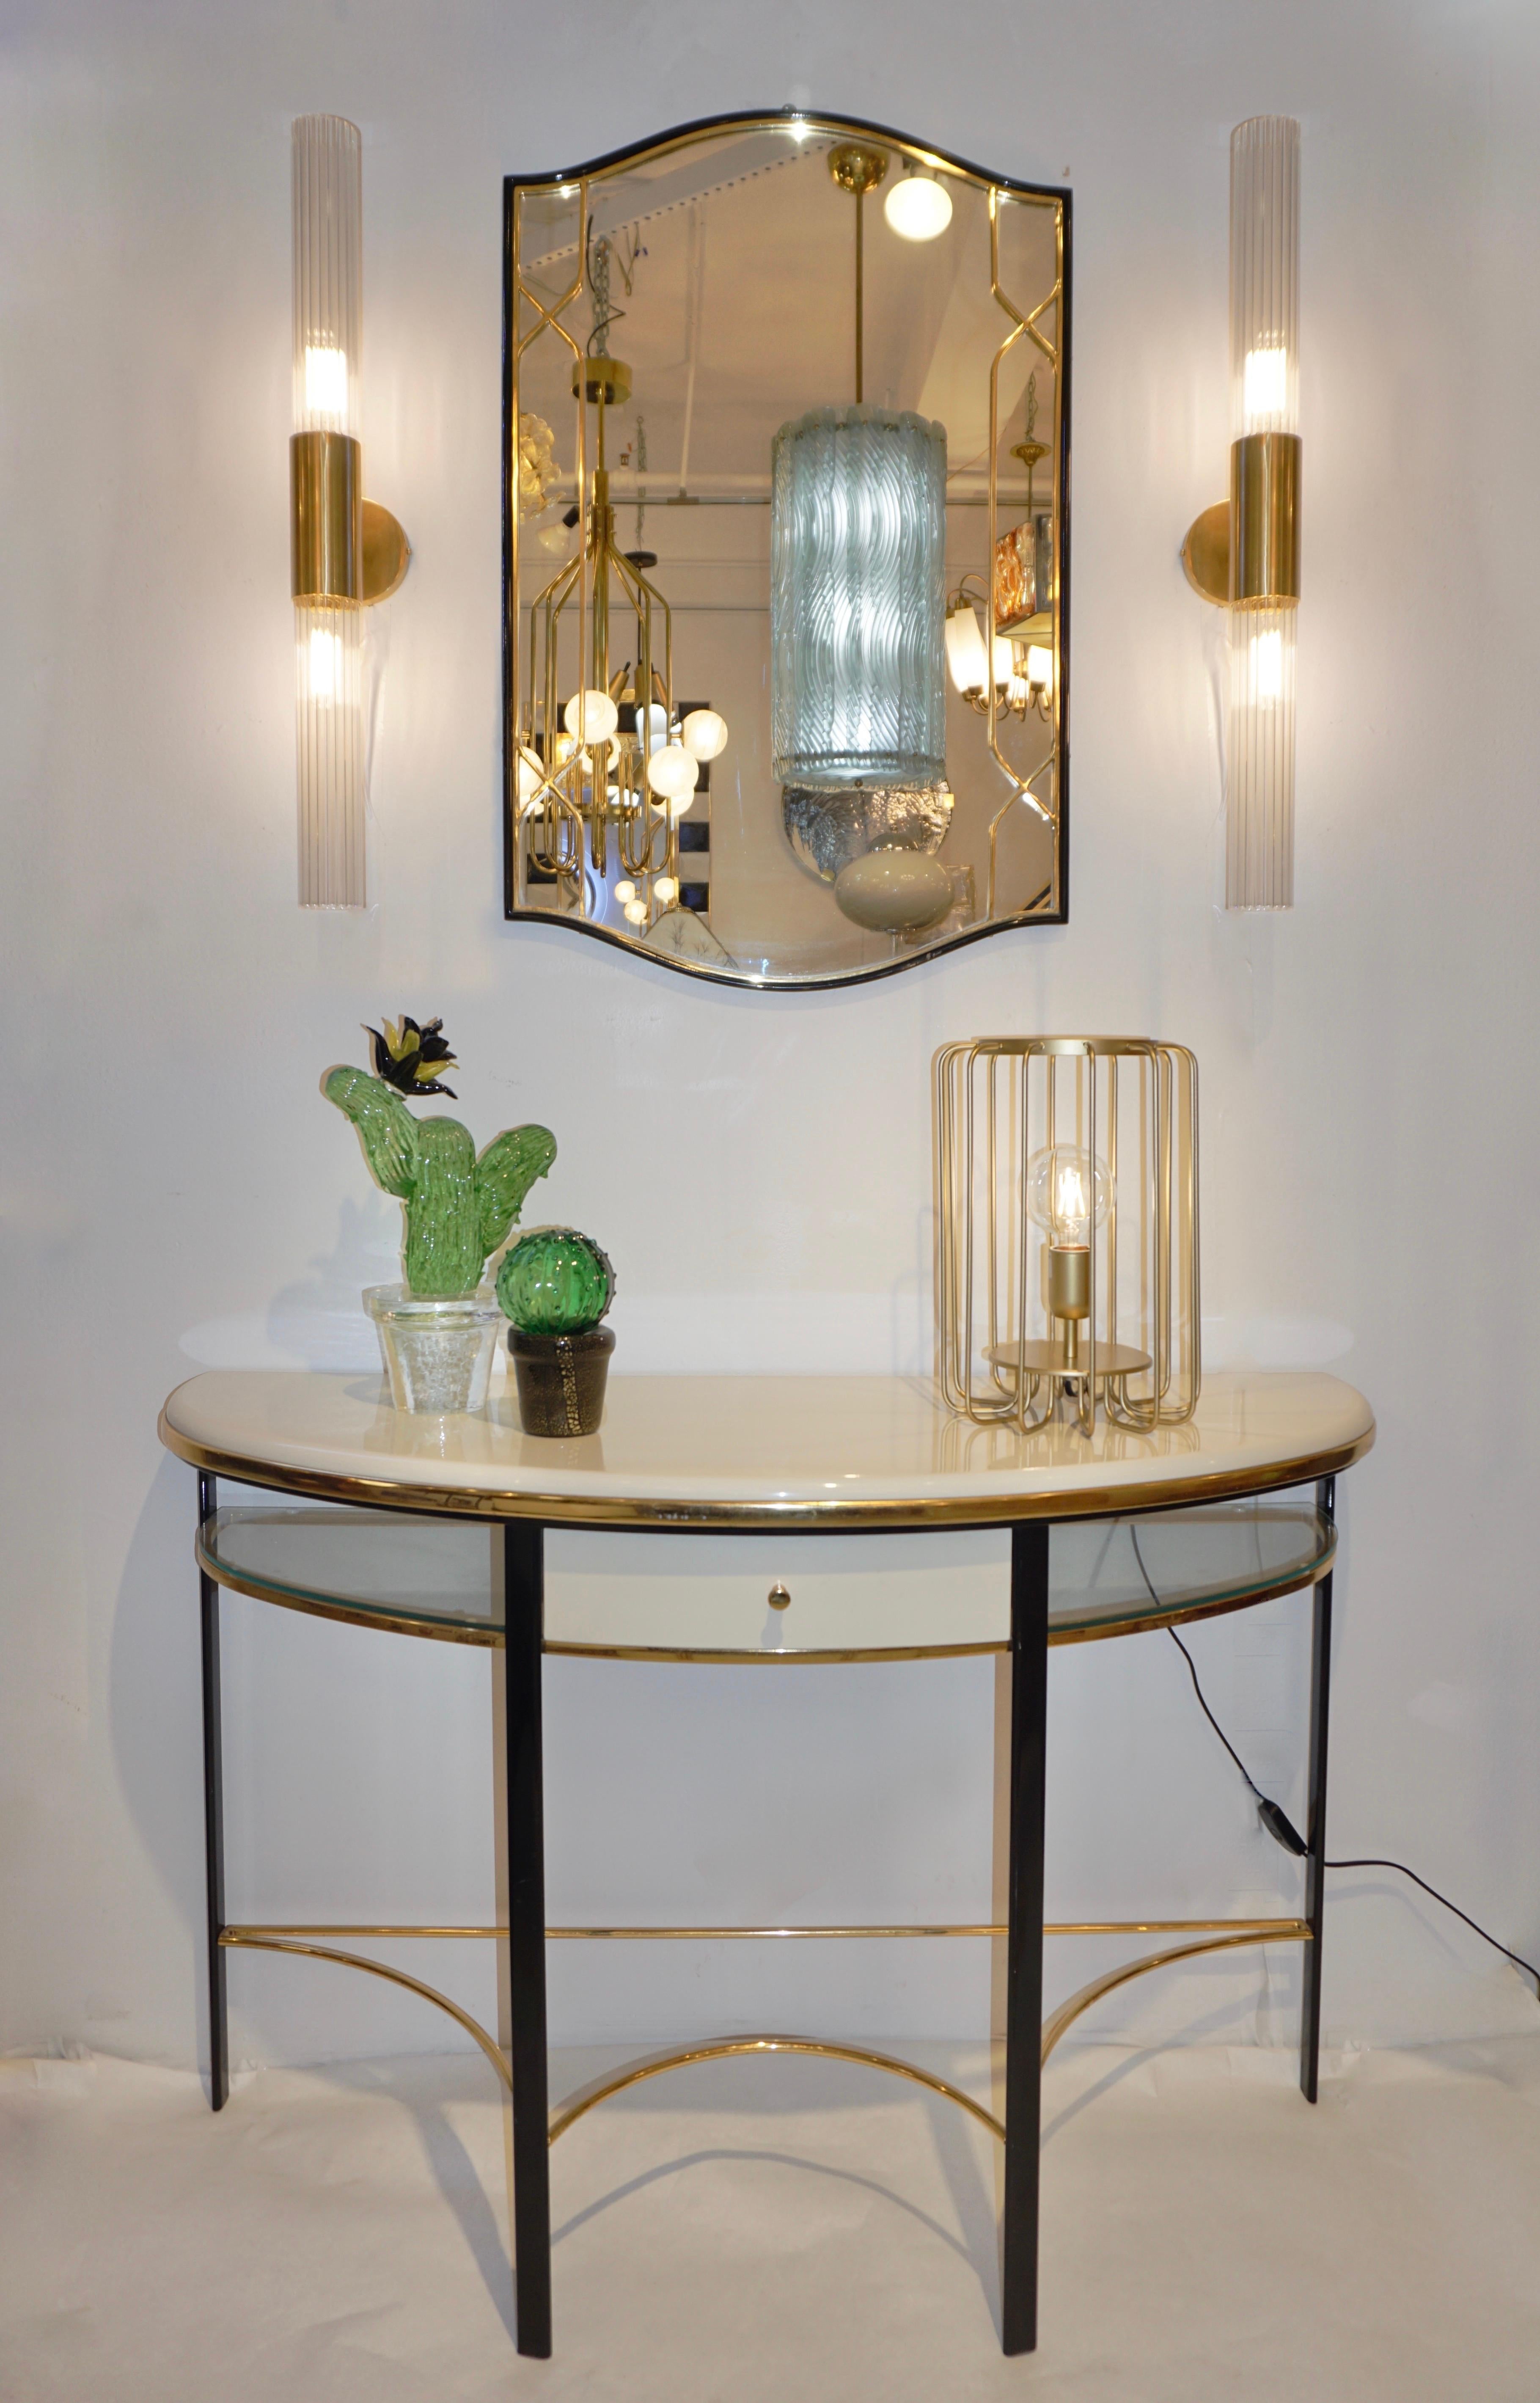 Blackened Cosulich Interiors Minimalist Italian Futurist Gold Brass Steel Open Table Lamp For Sale